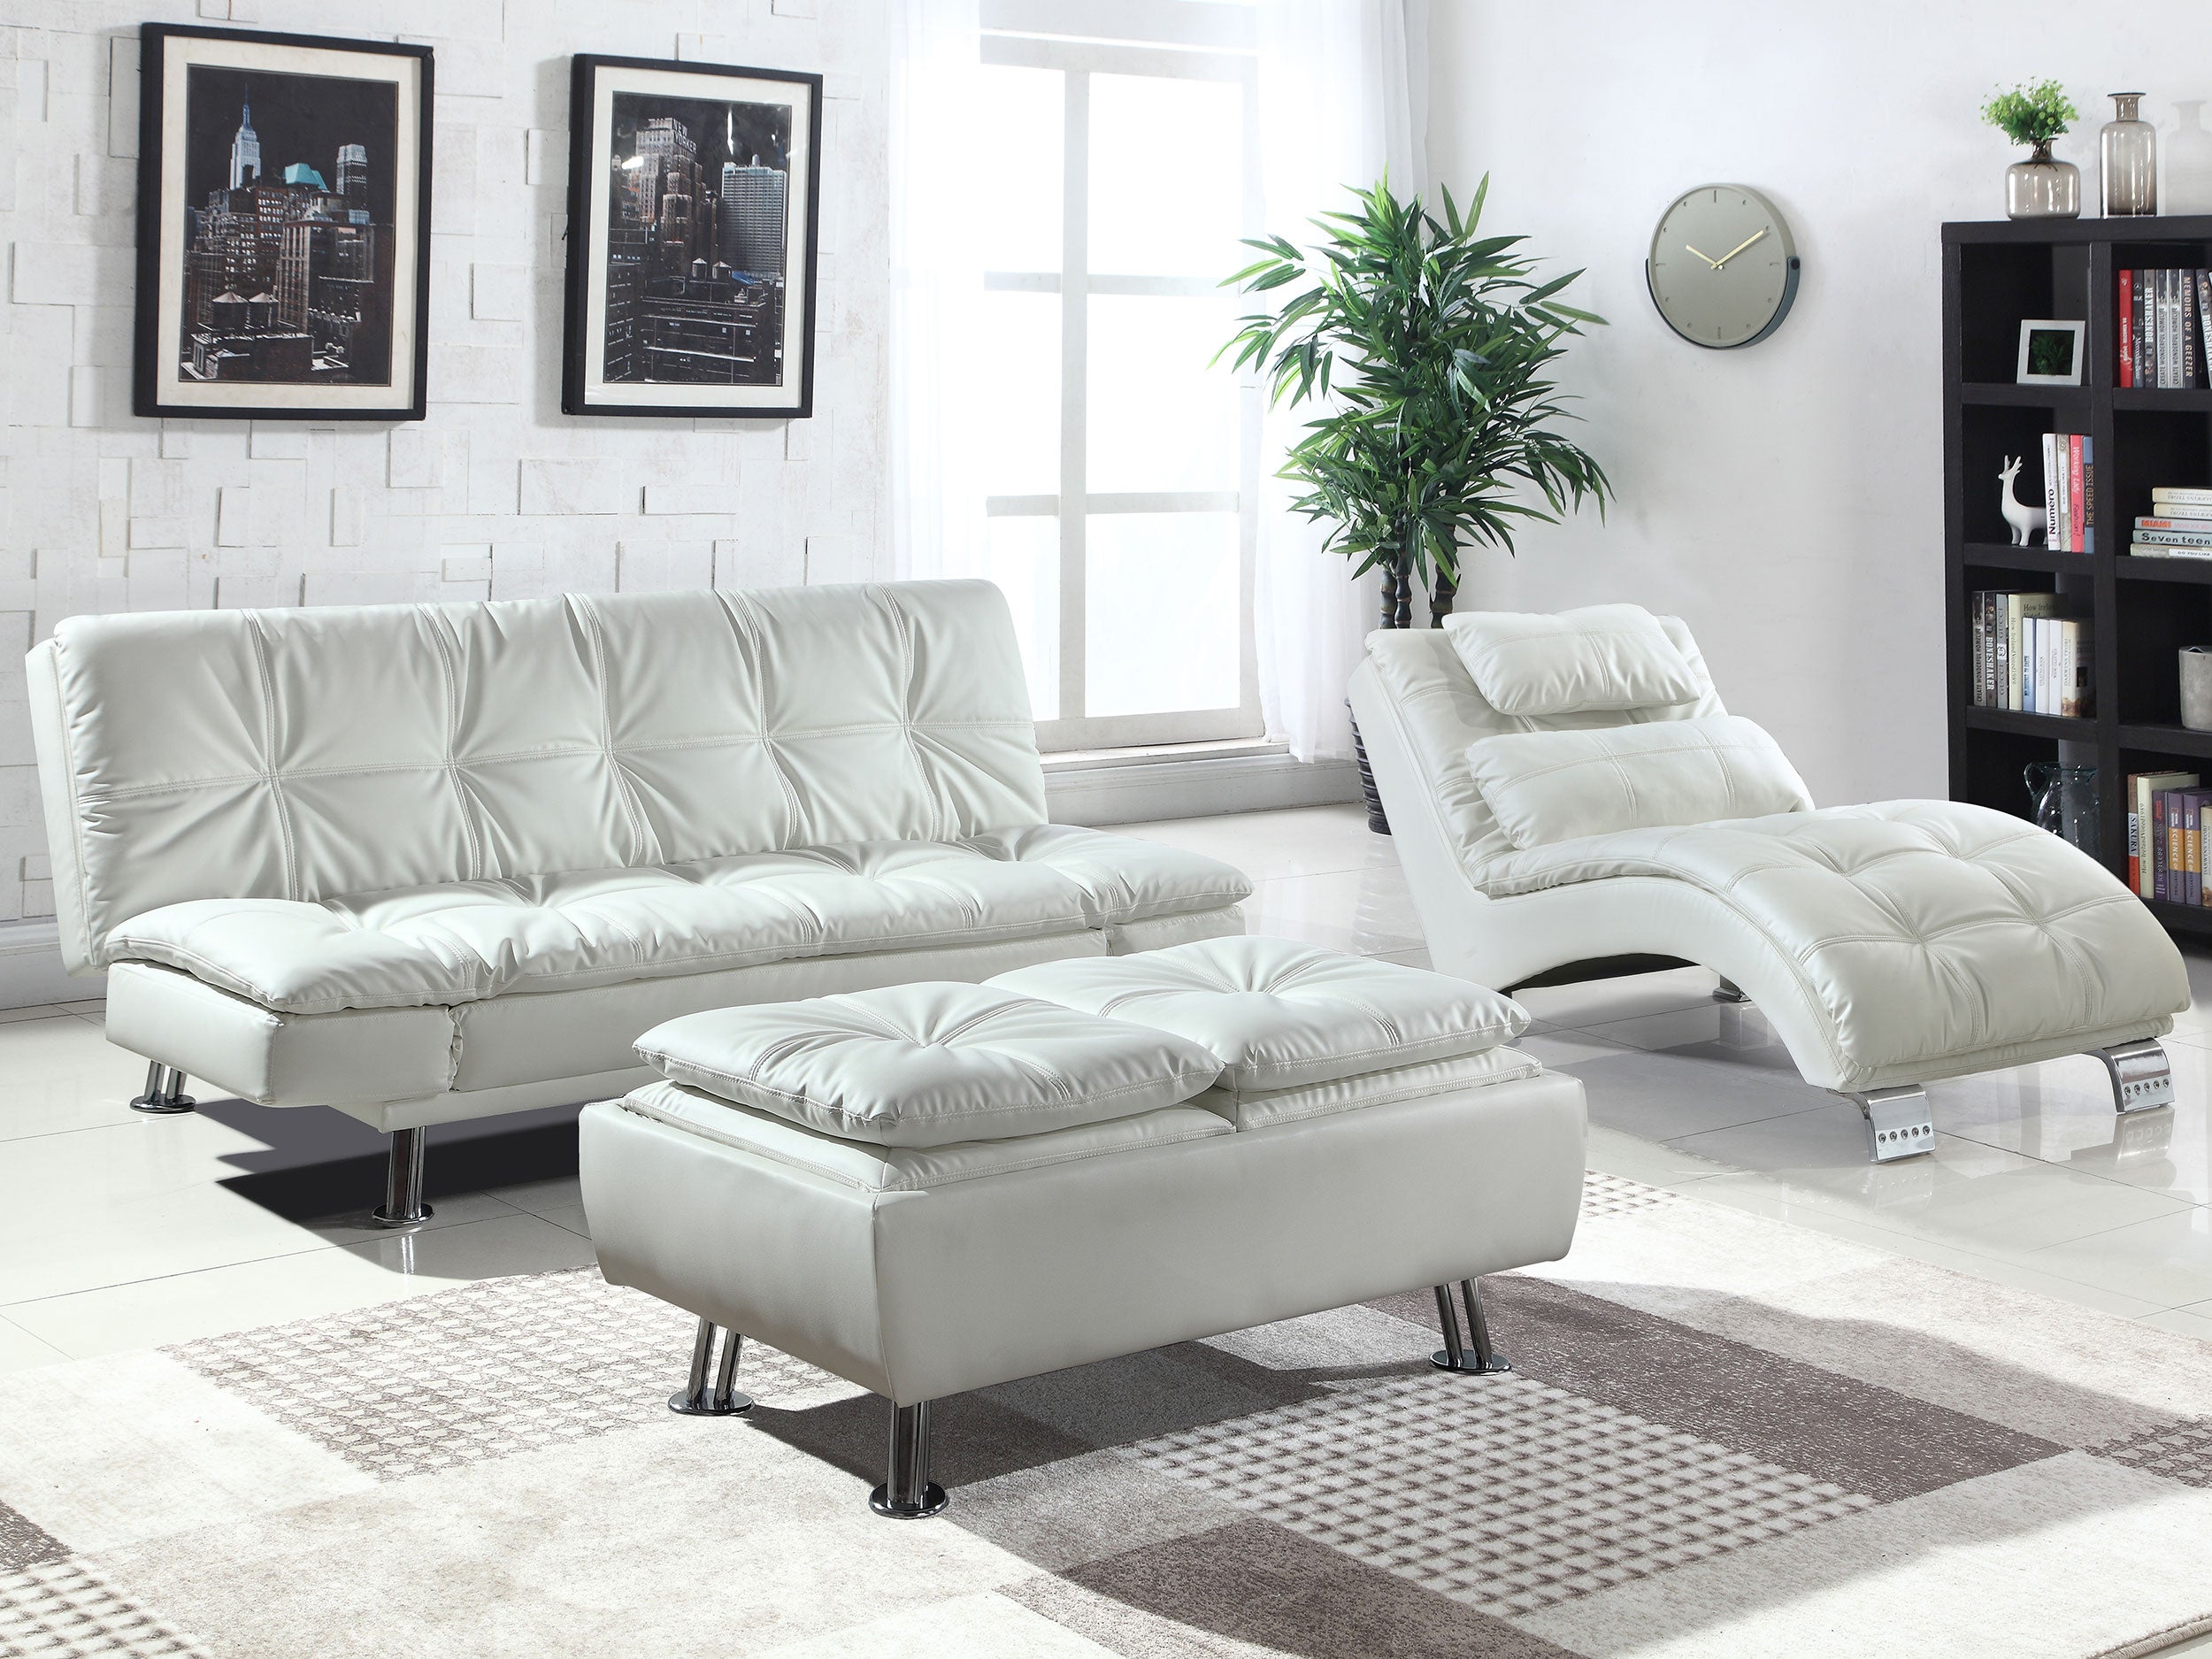 Coaster Dilleston Tufted Back Upholstered Sofa Bed White Default Title